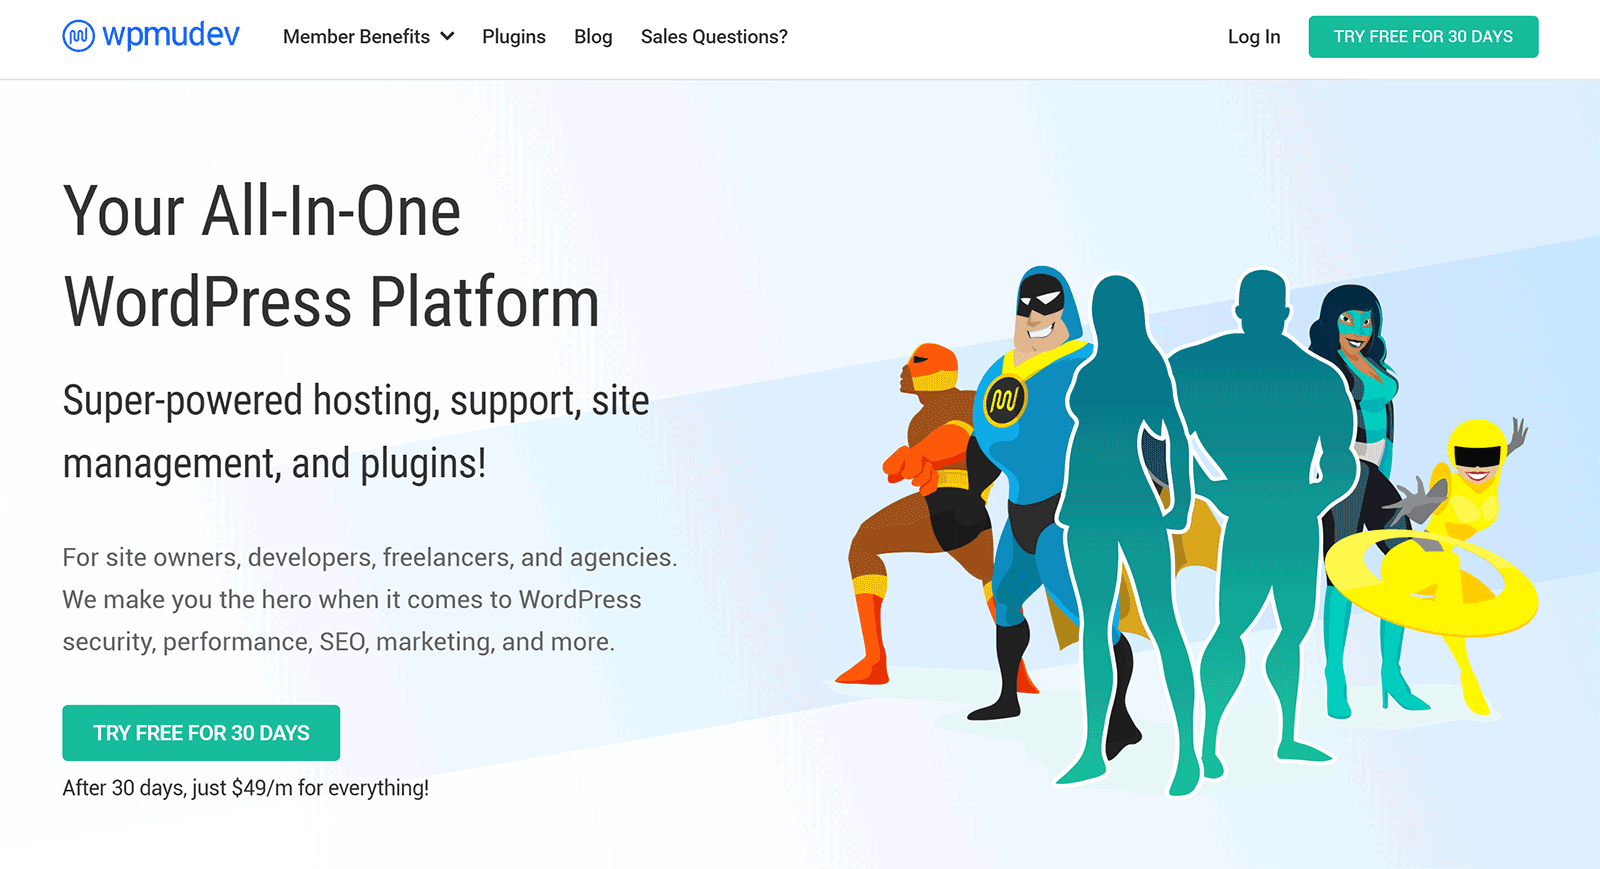 WPMU Dev - The All-in-One WordPress Platform